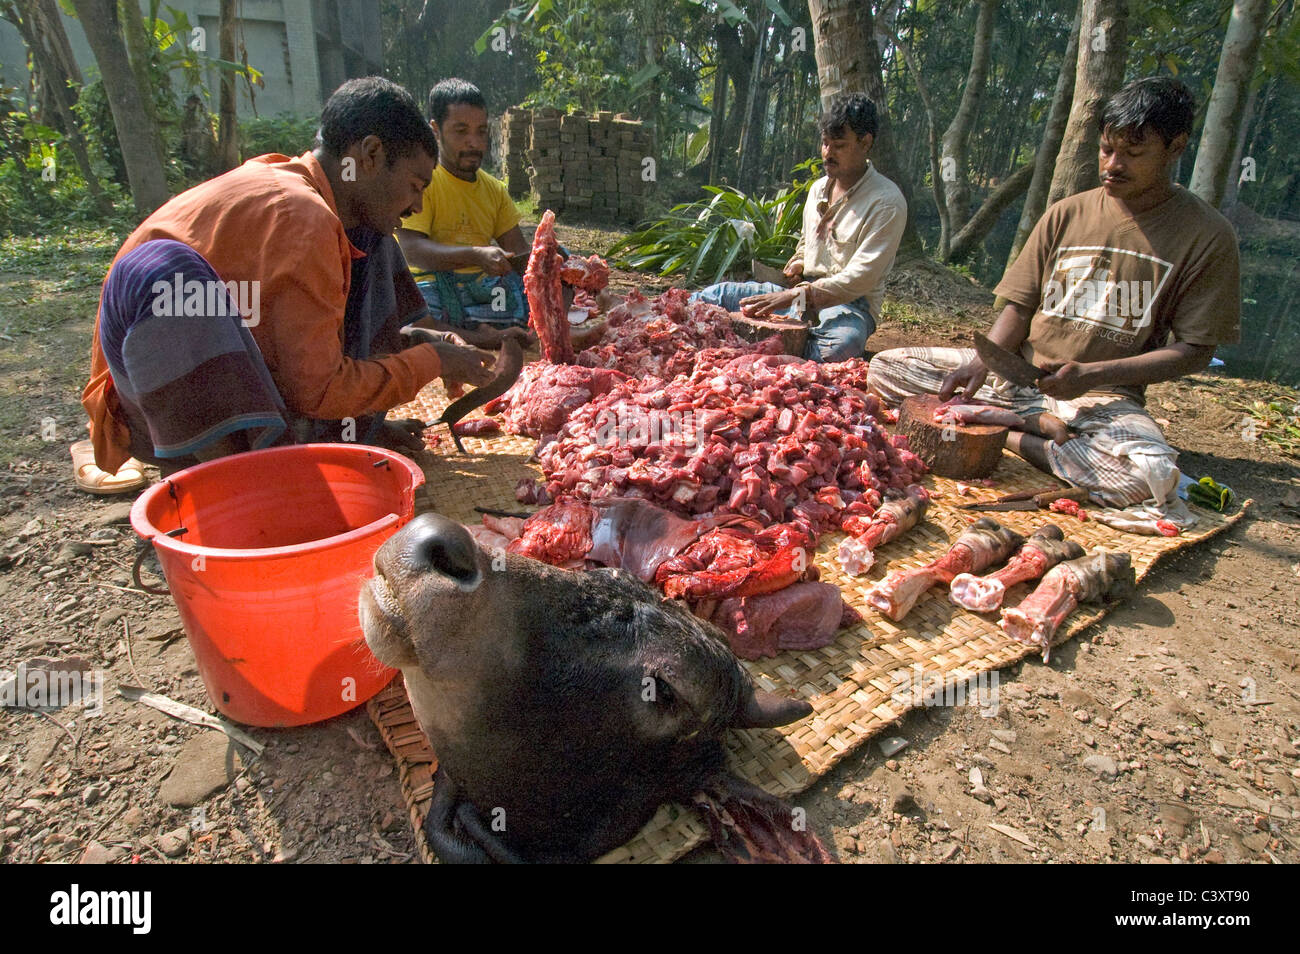 Men prepare a cow for dinner during the Eid - ul - Azha holiday (The Eid of sacrifice). Stock Photo